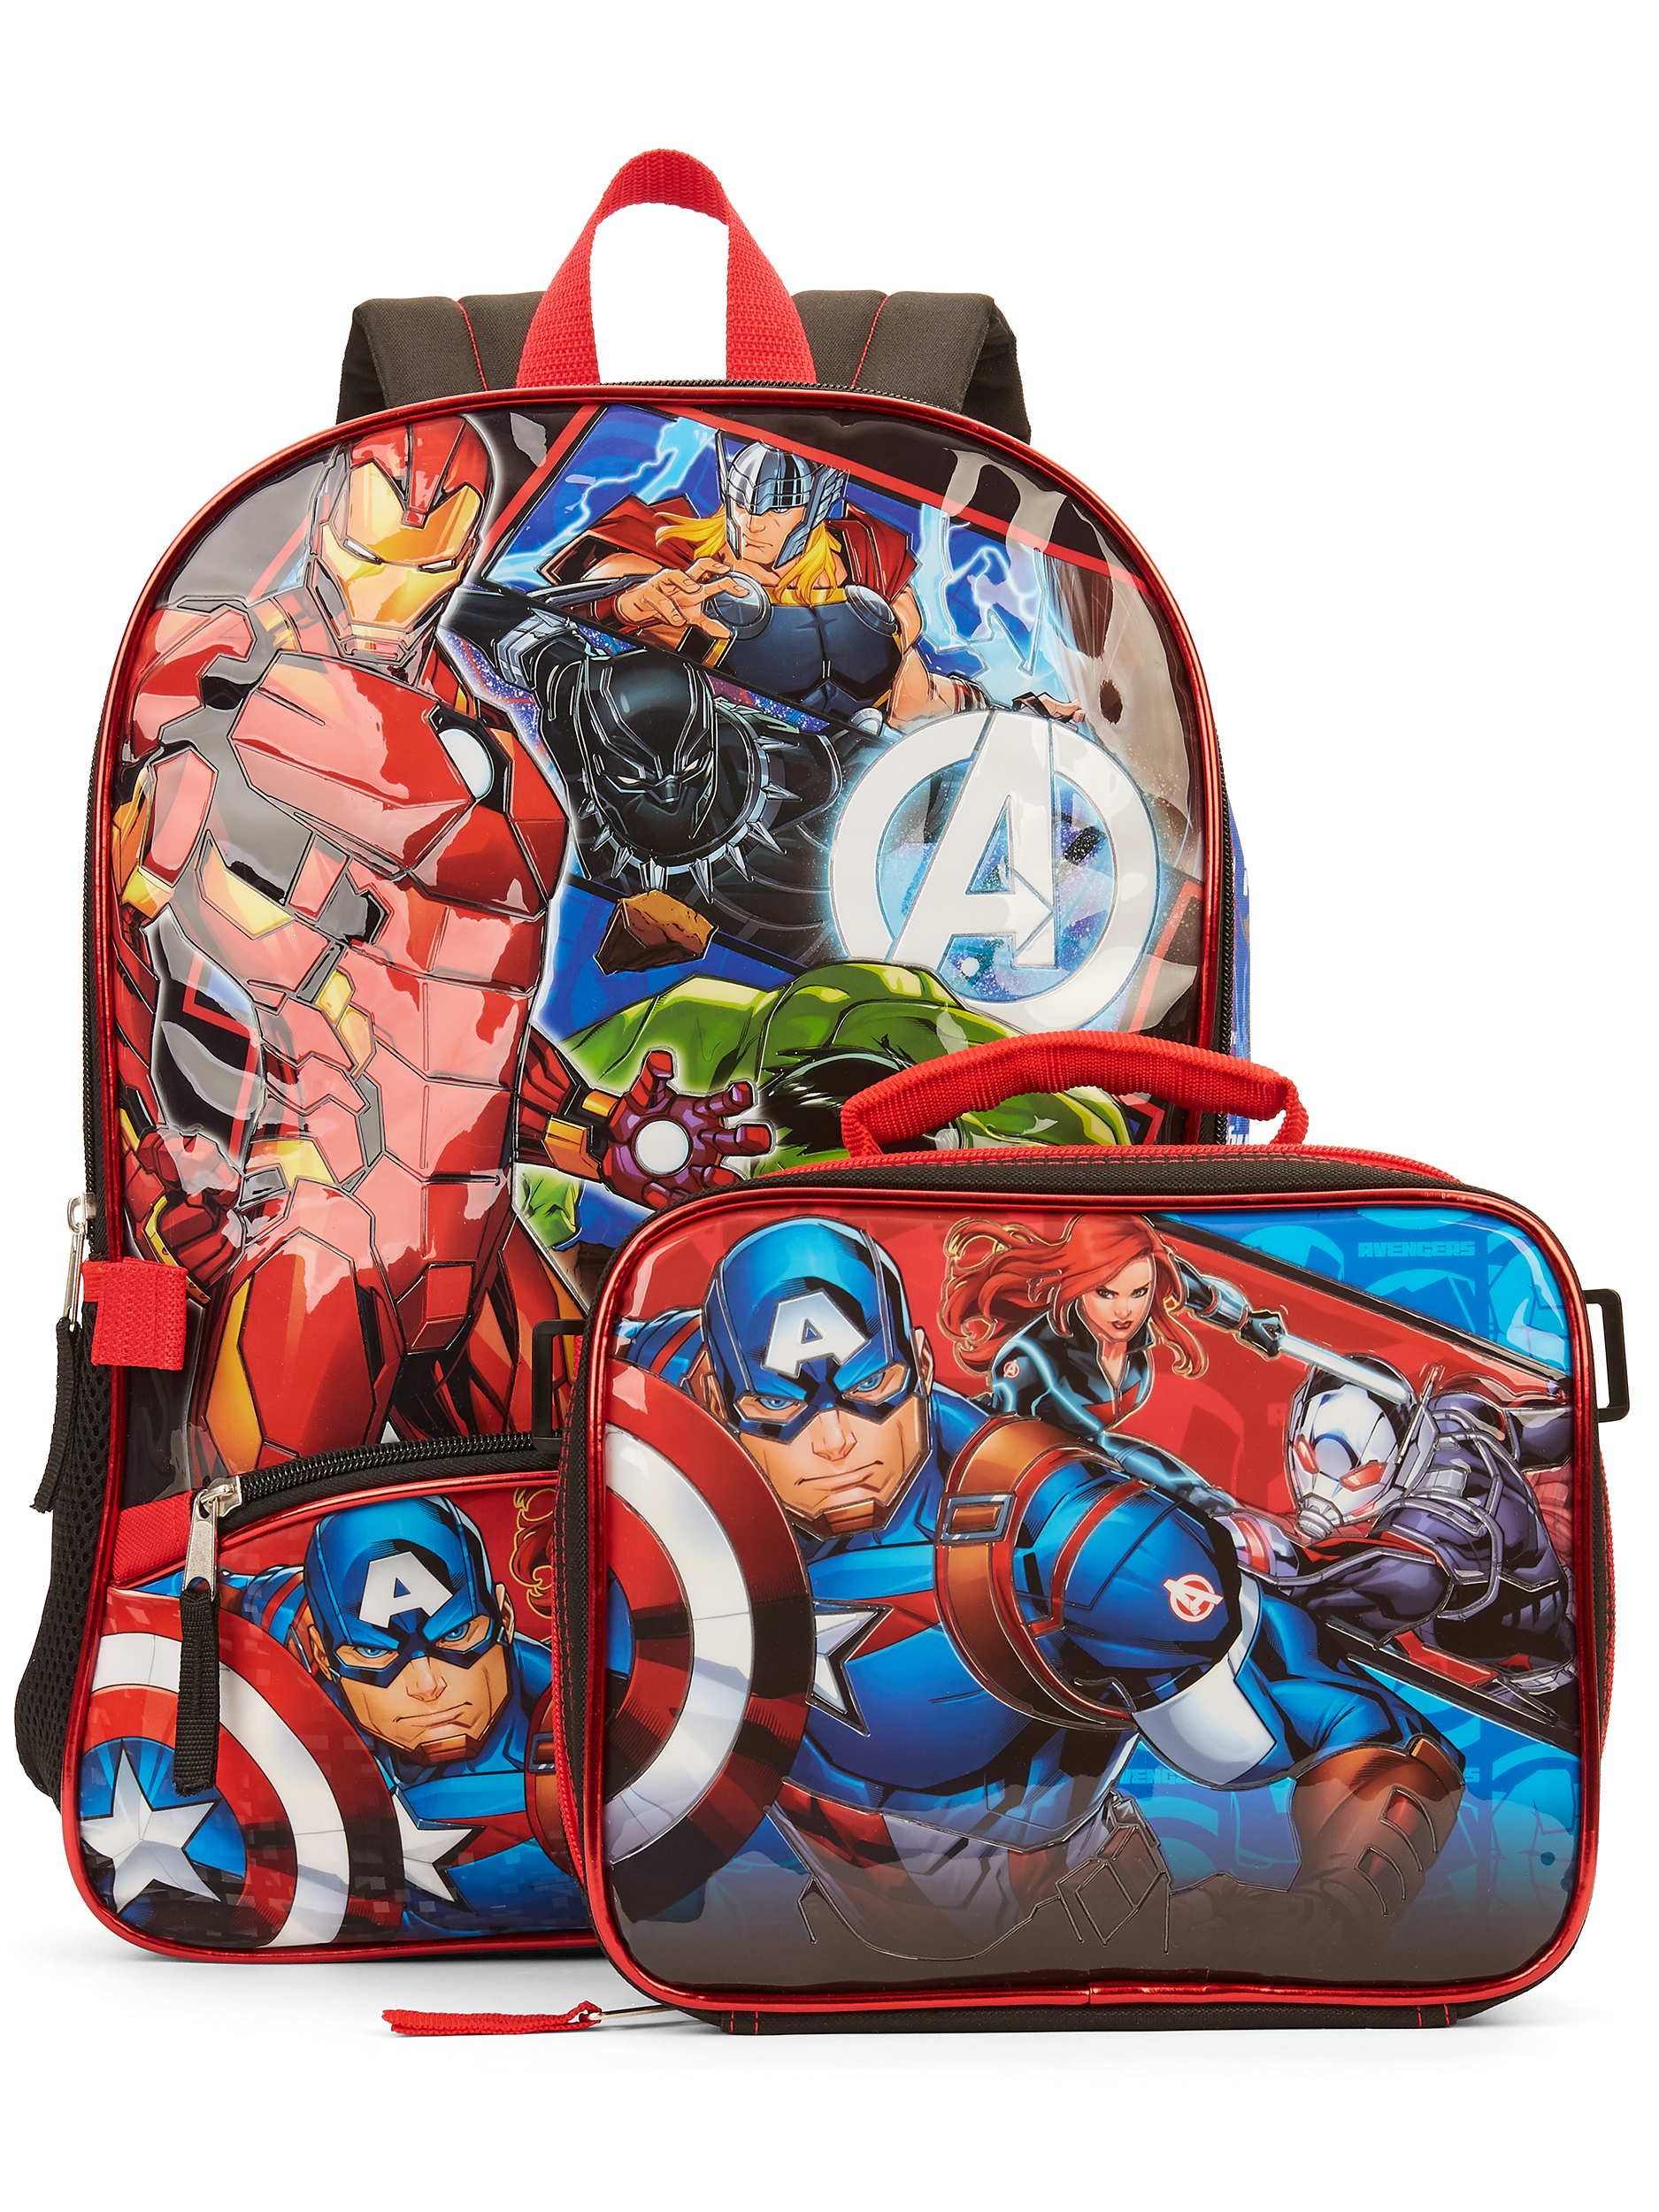 Marvel Avengers Boys' Backpack with Lunch Bag Set - image 1 of 3